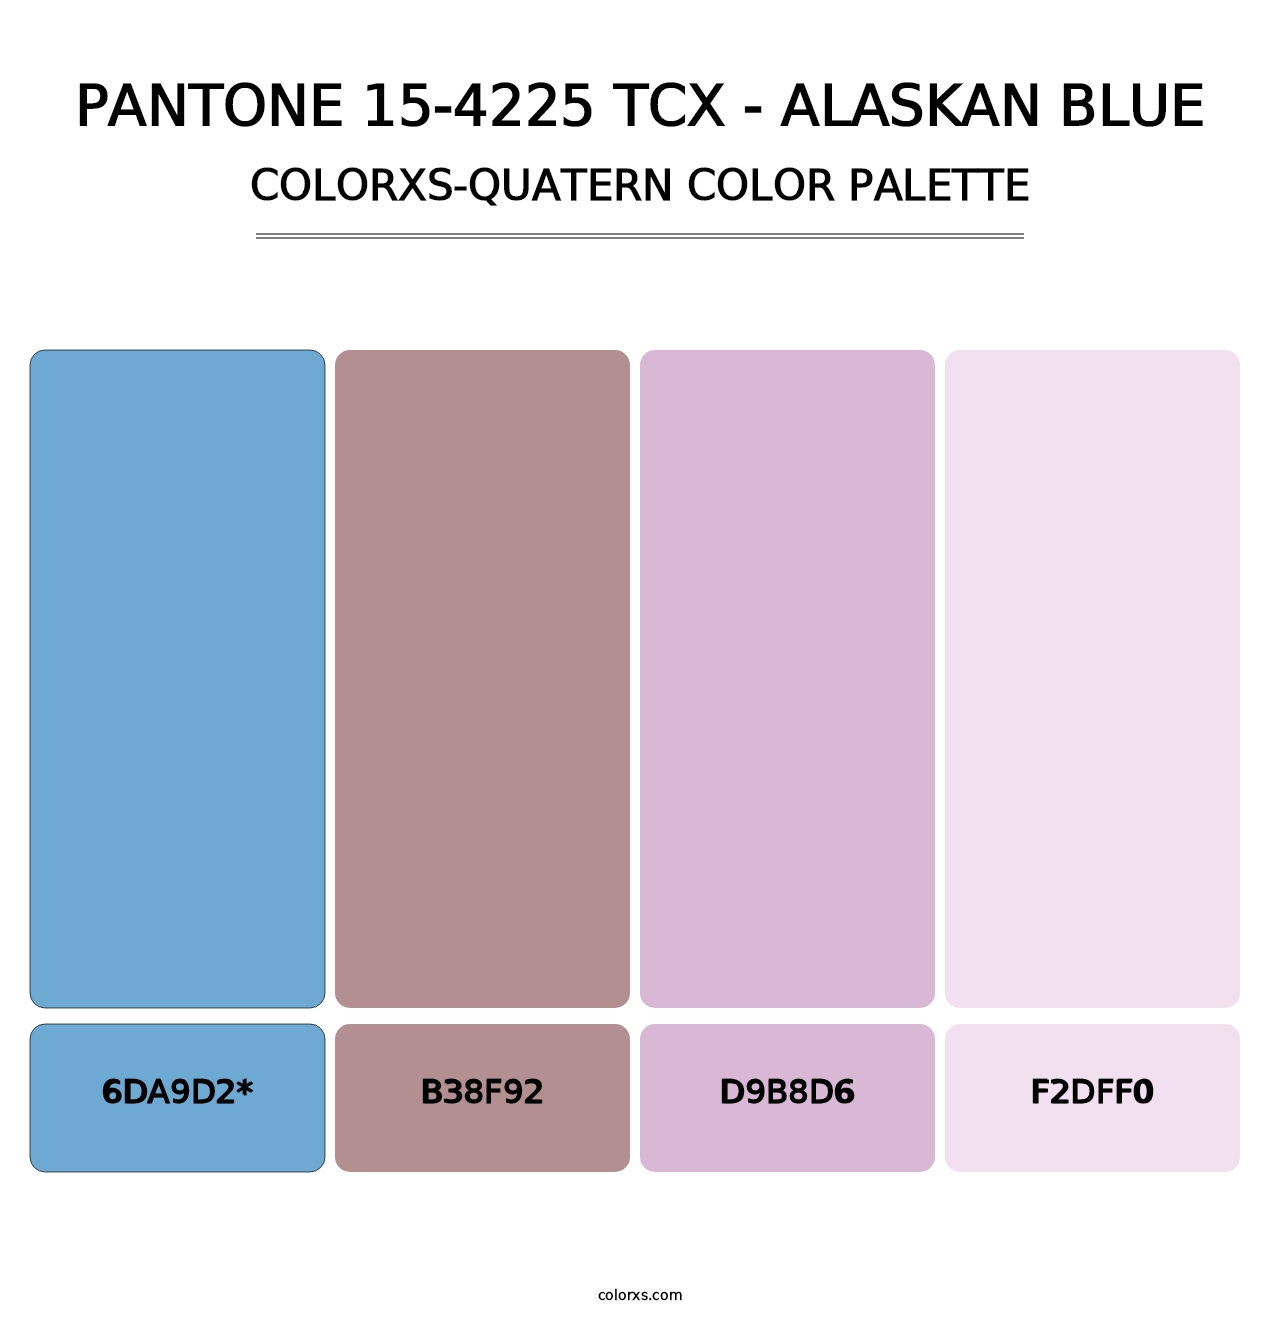 PANTONE 15-4225 TCX - Alaskan Blue - Colorxs Quatern Palette